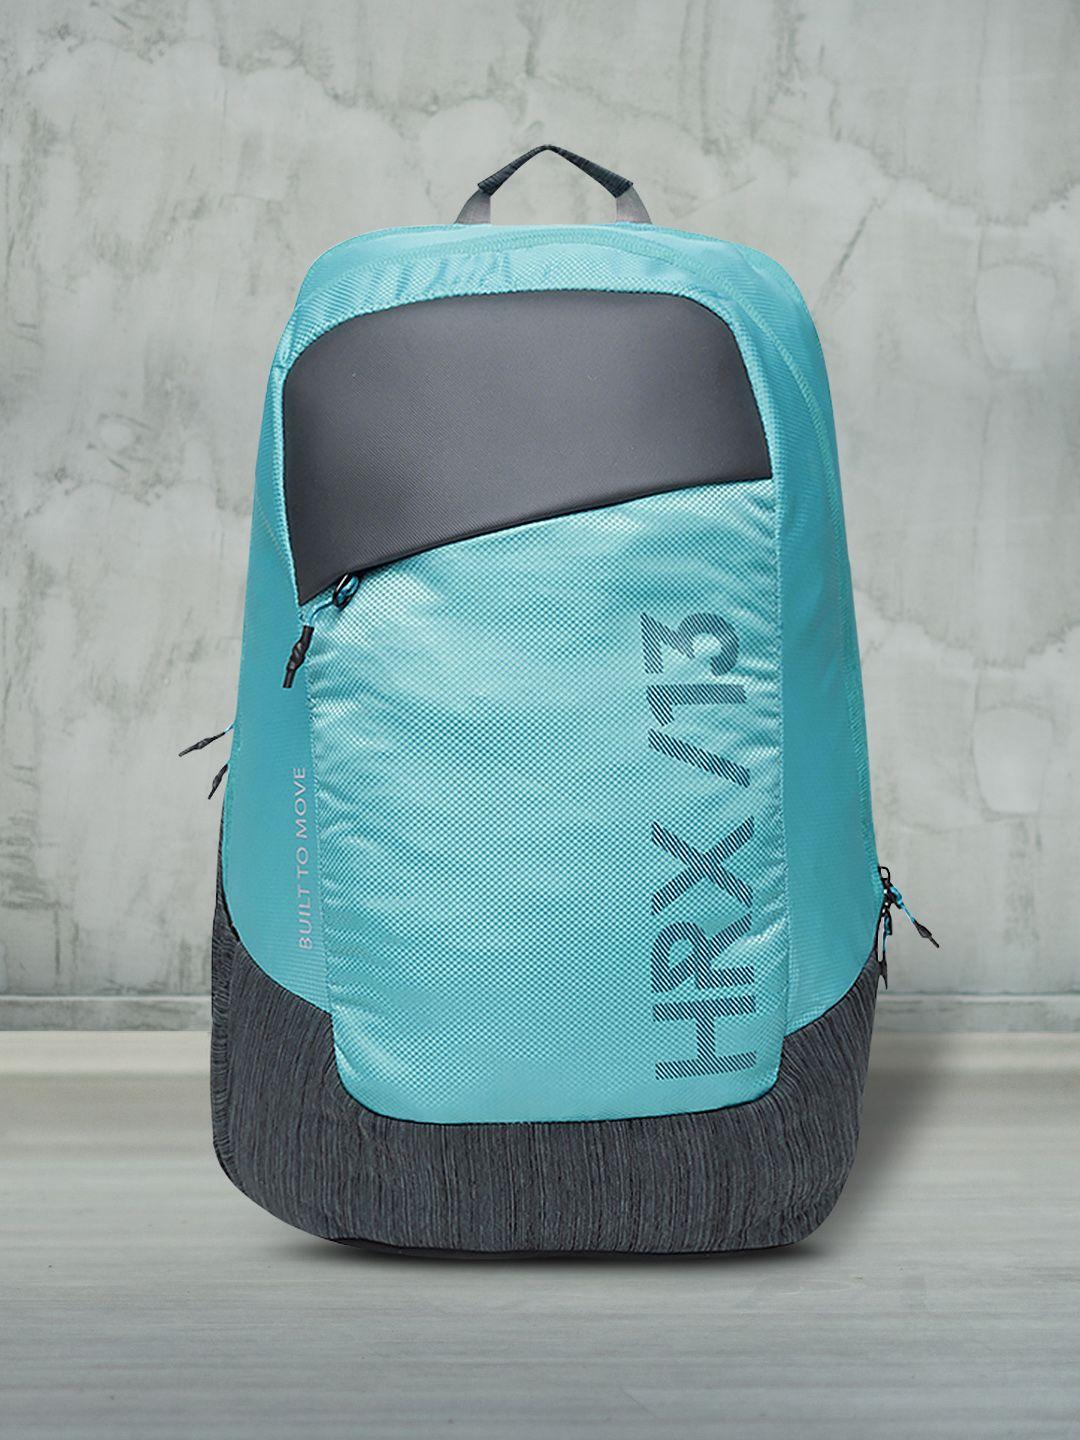 hrx-by-hrithik-roshan-unisex-blue-&-grey-colourblocked-multiutility-laptop-backpack